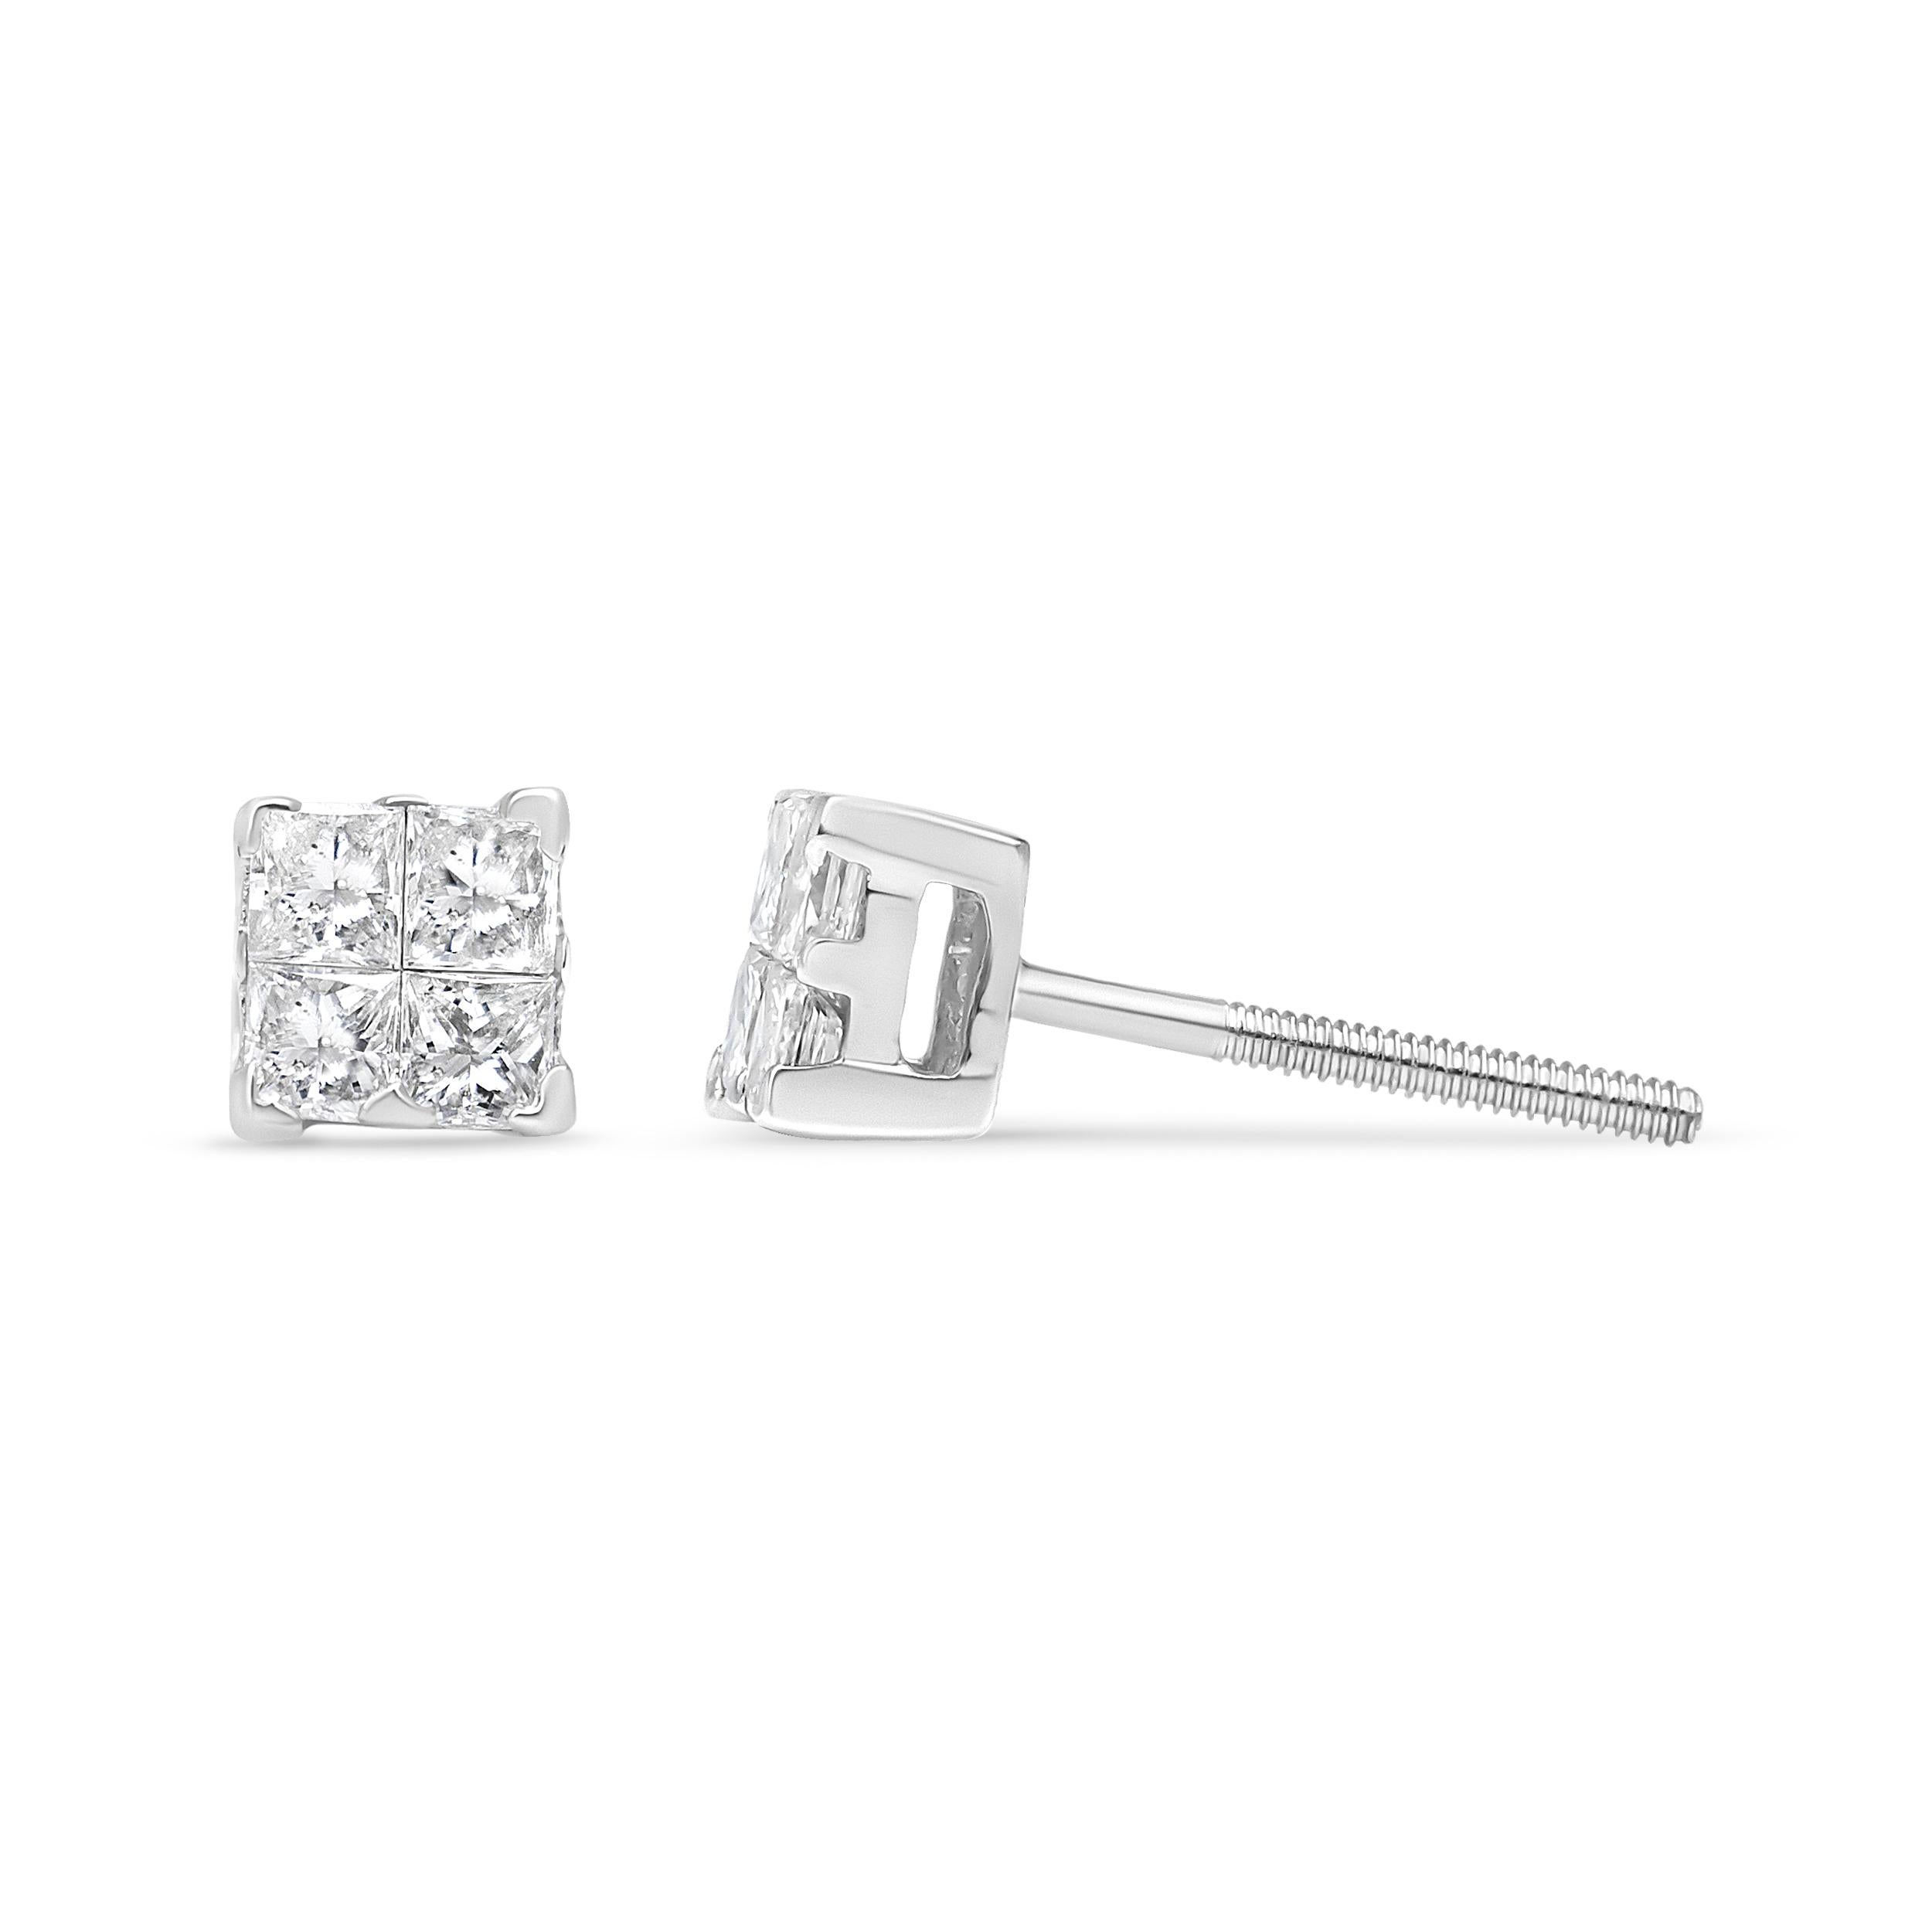 5/8 carat diamond earrings